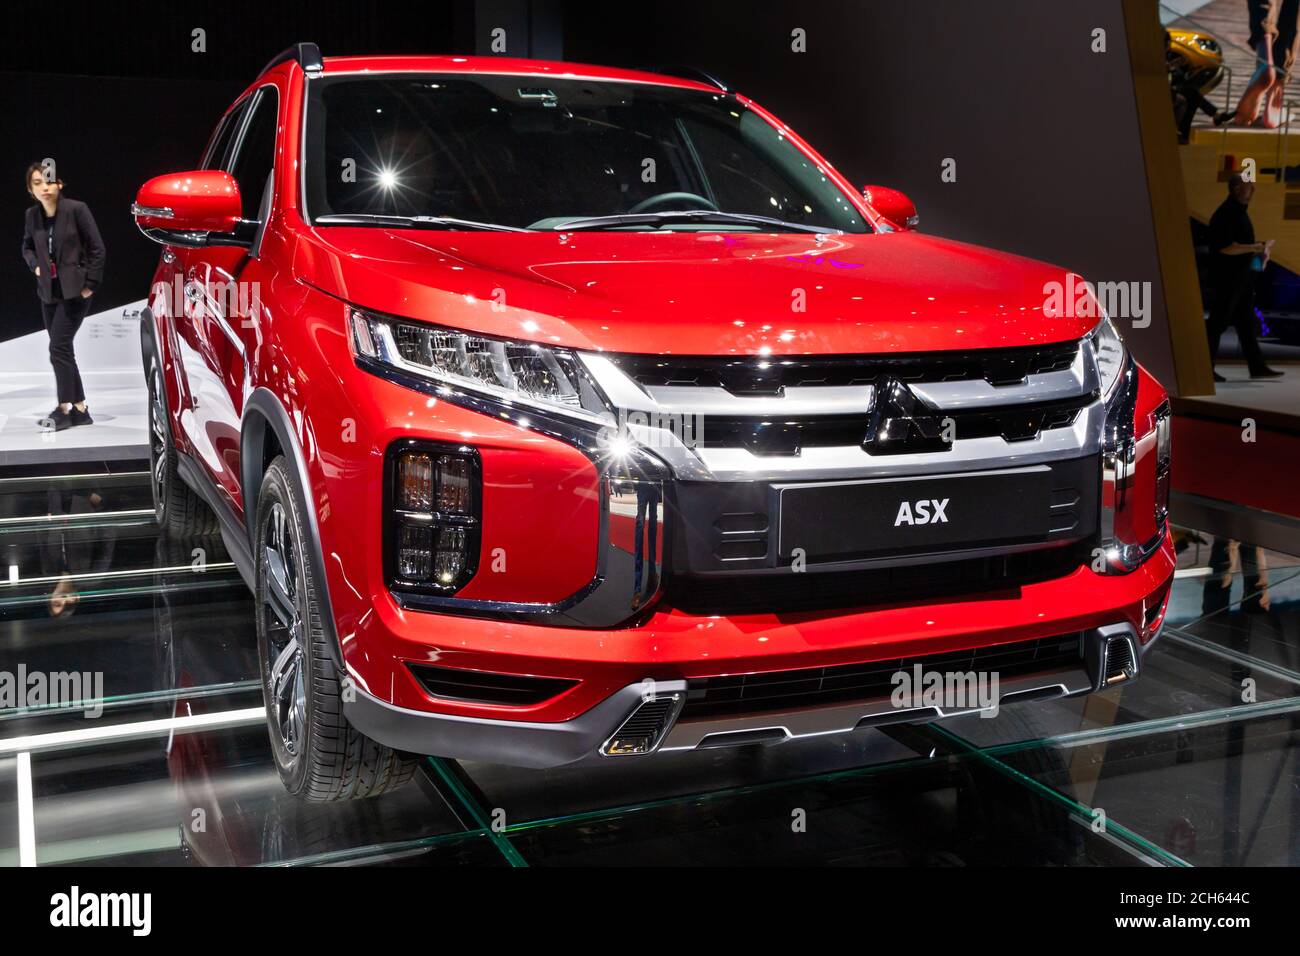 Mitsubishi ASX shown at the 89th Geneva International Motor Show. Geneva, Switzerland - March 5, 2019. Stock Photo